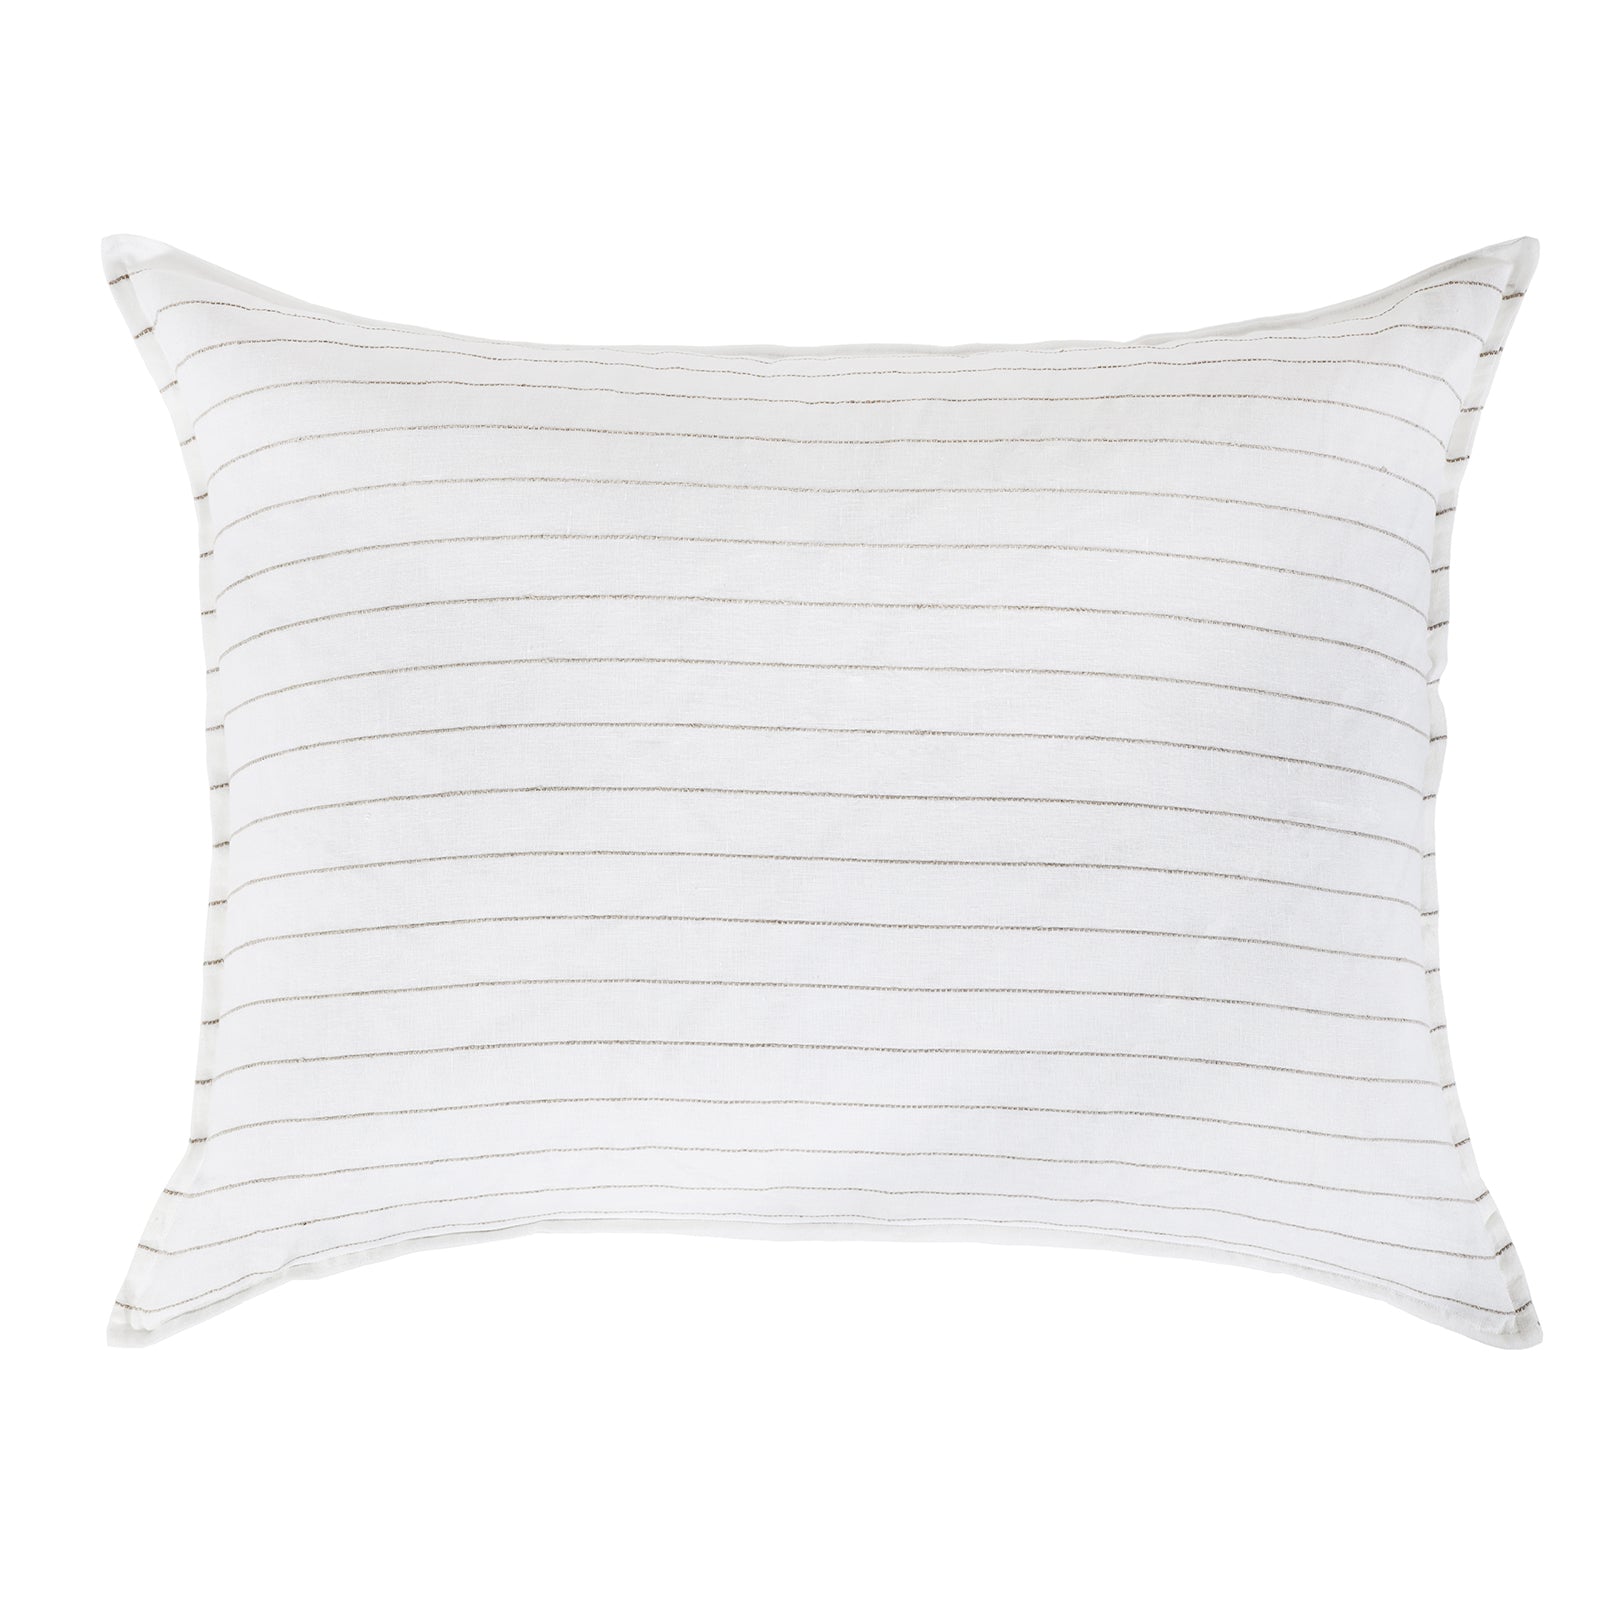 blake - white/natural color - big pillow - pom pom at home